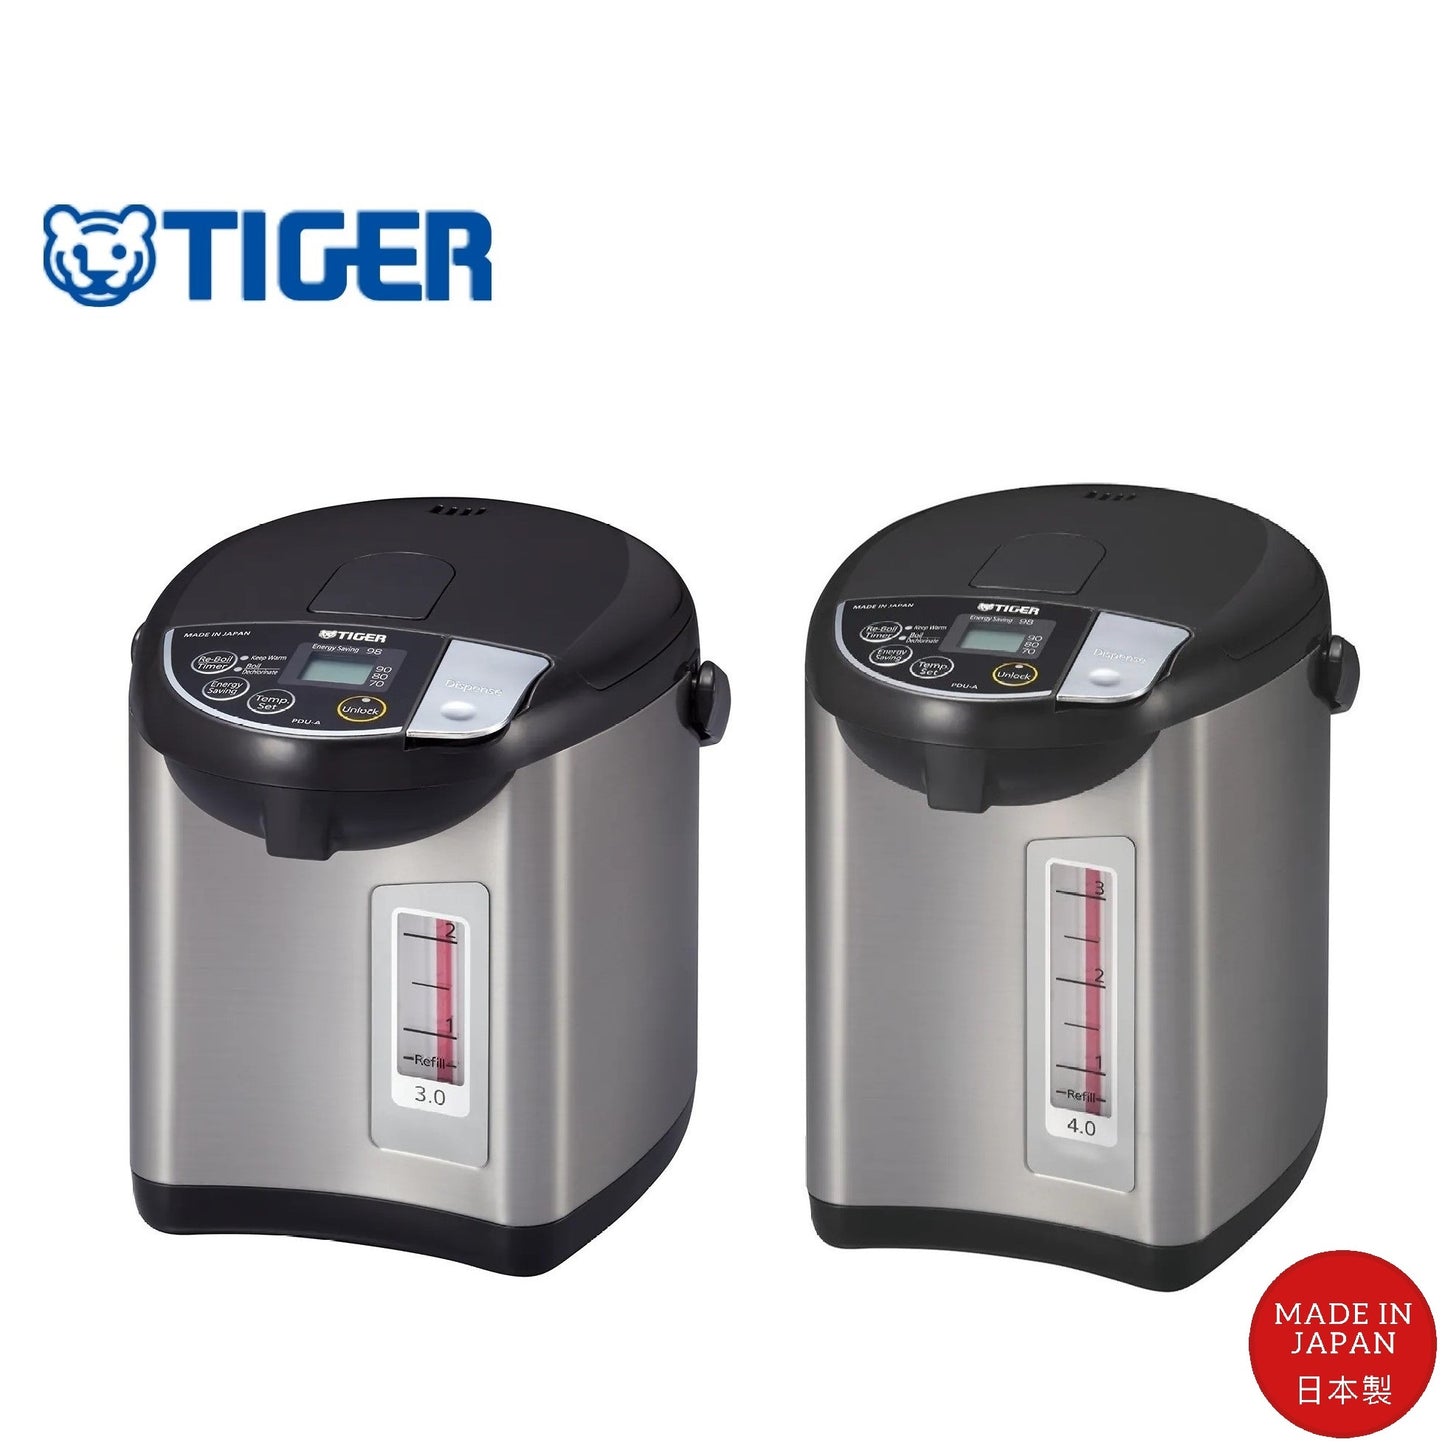 Tiger Hot Water Dispenser